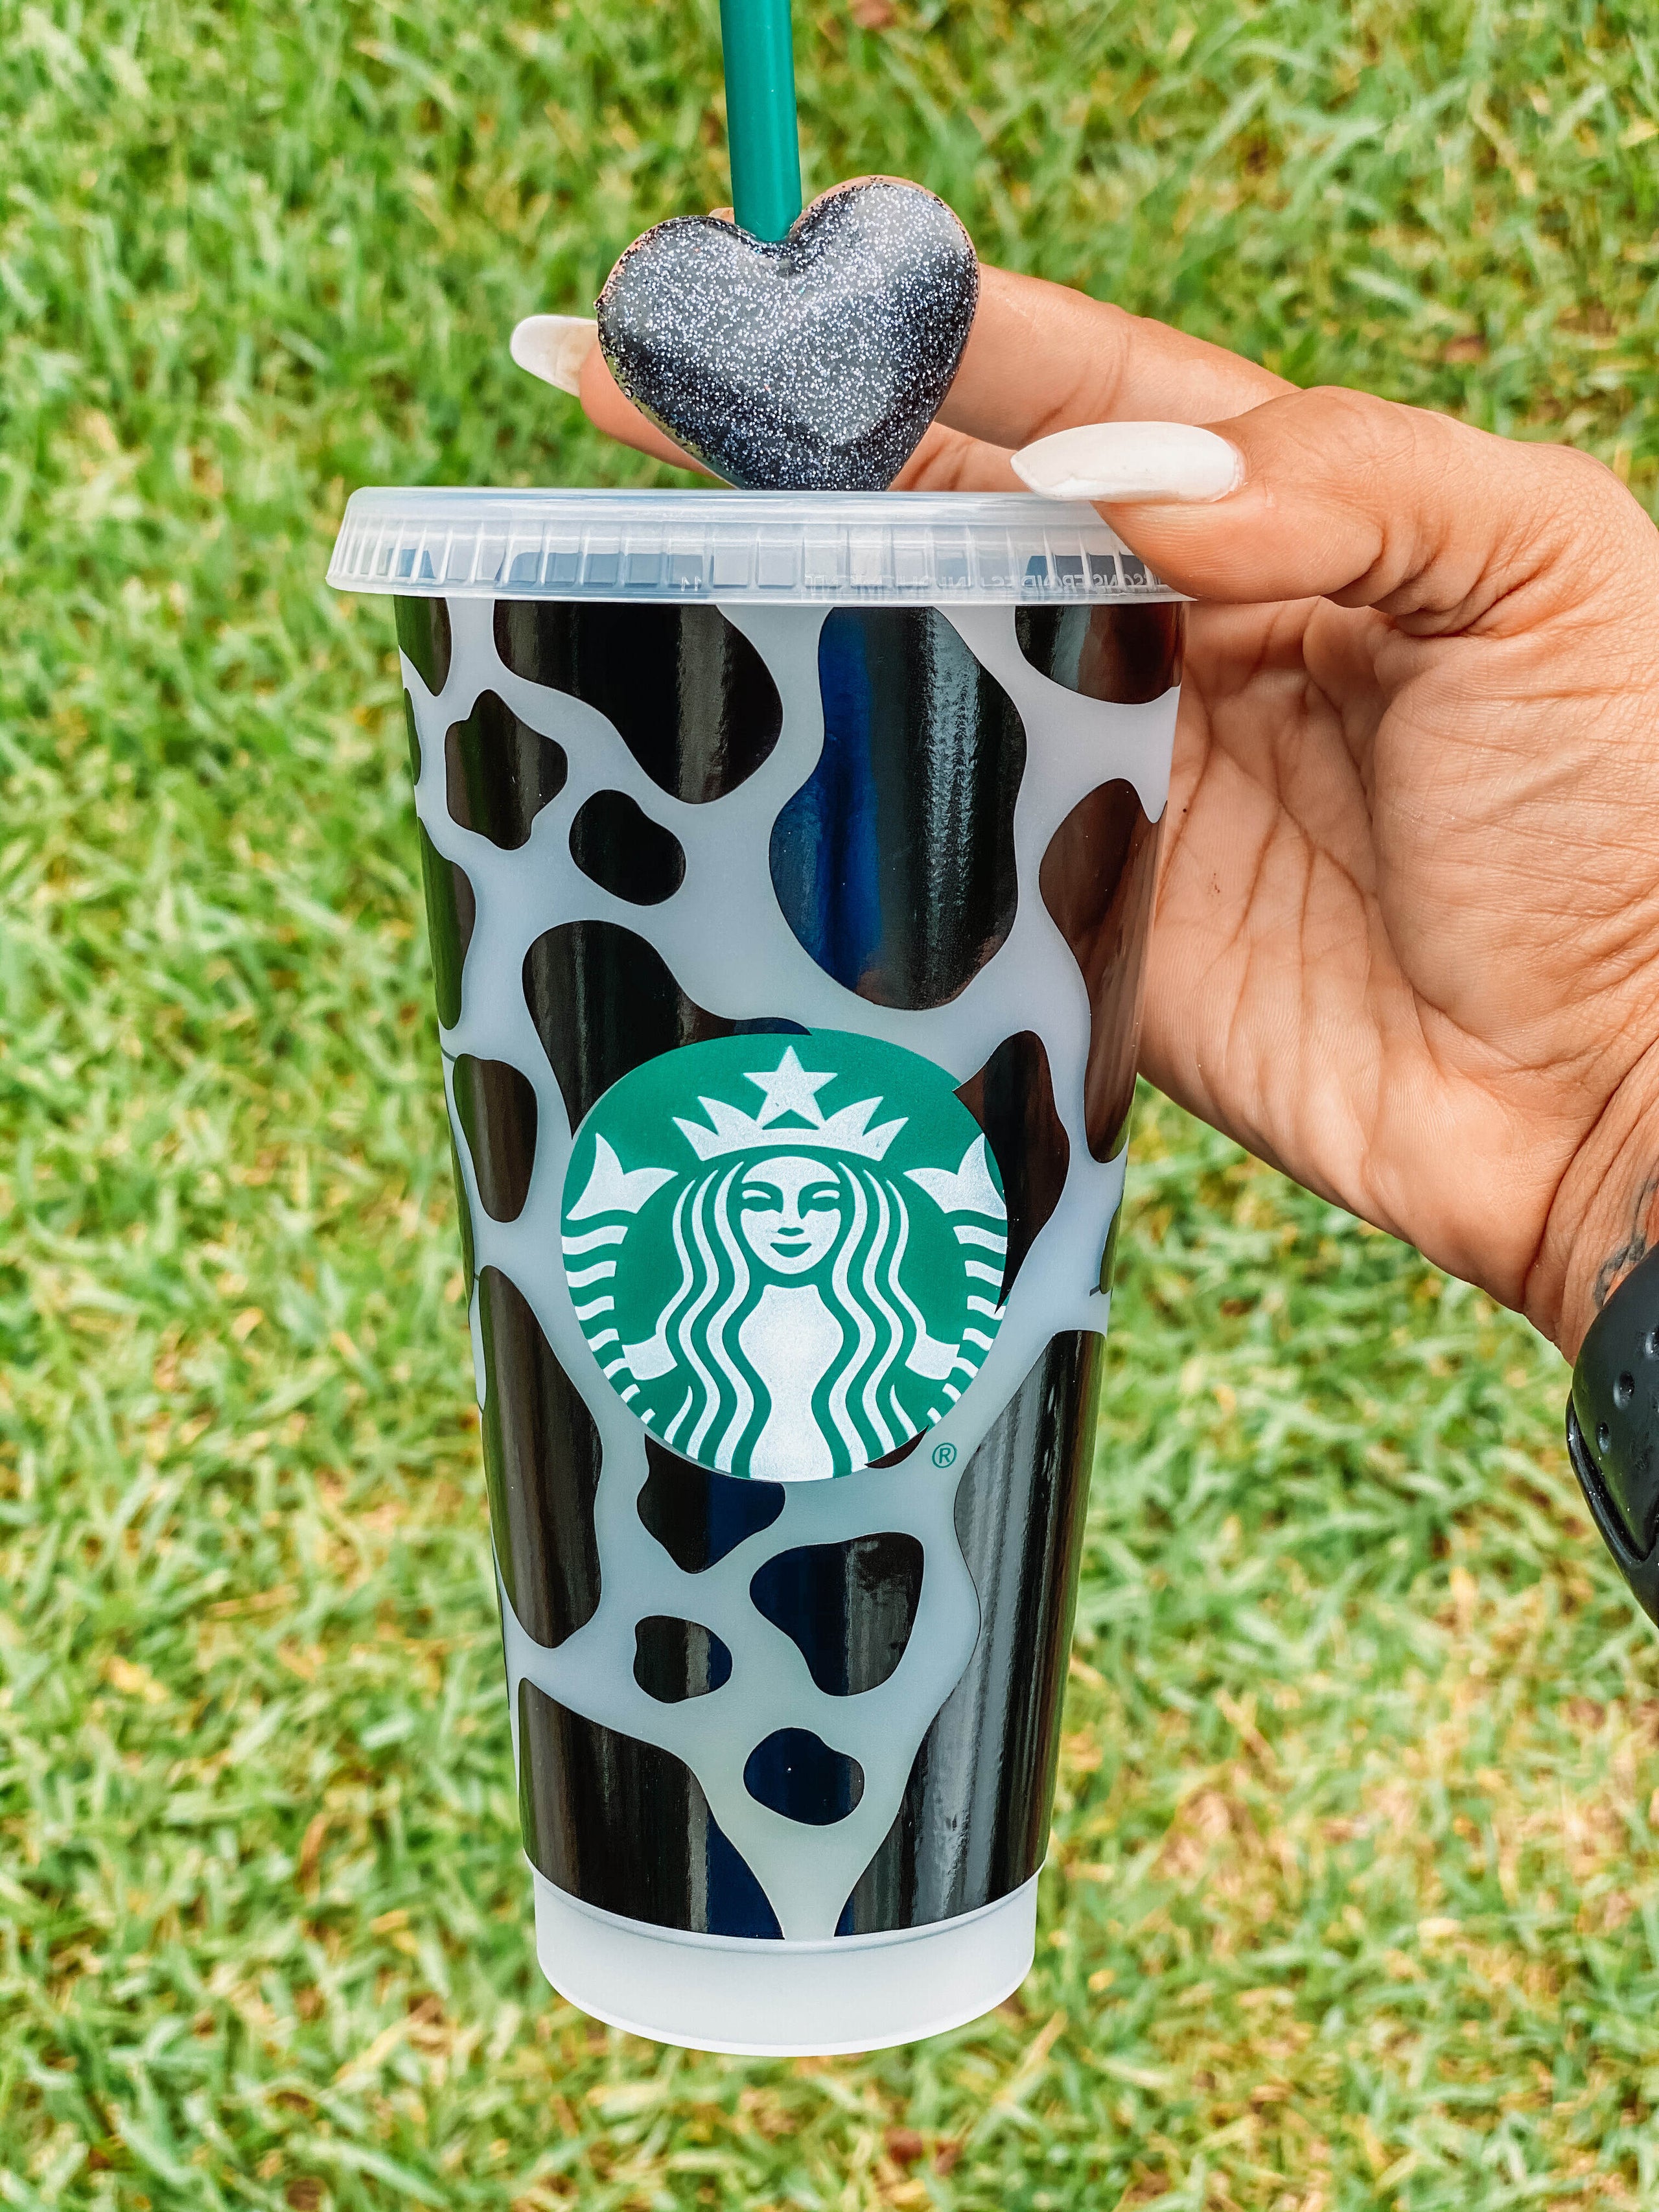 Glittered Starbucks Cup, Reusable Starbucks cold cup, Starbucks Venti  Cold Cup, Glittered Tumbler, Personalized Cup, Hocus Pocus